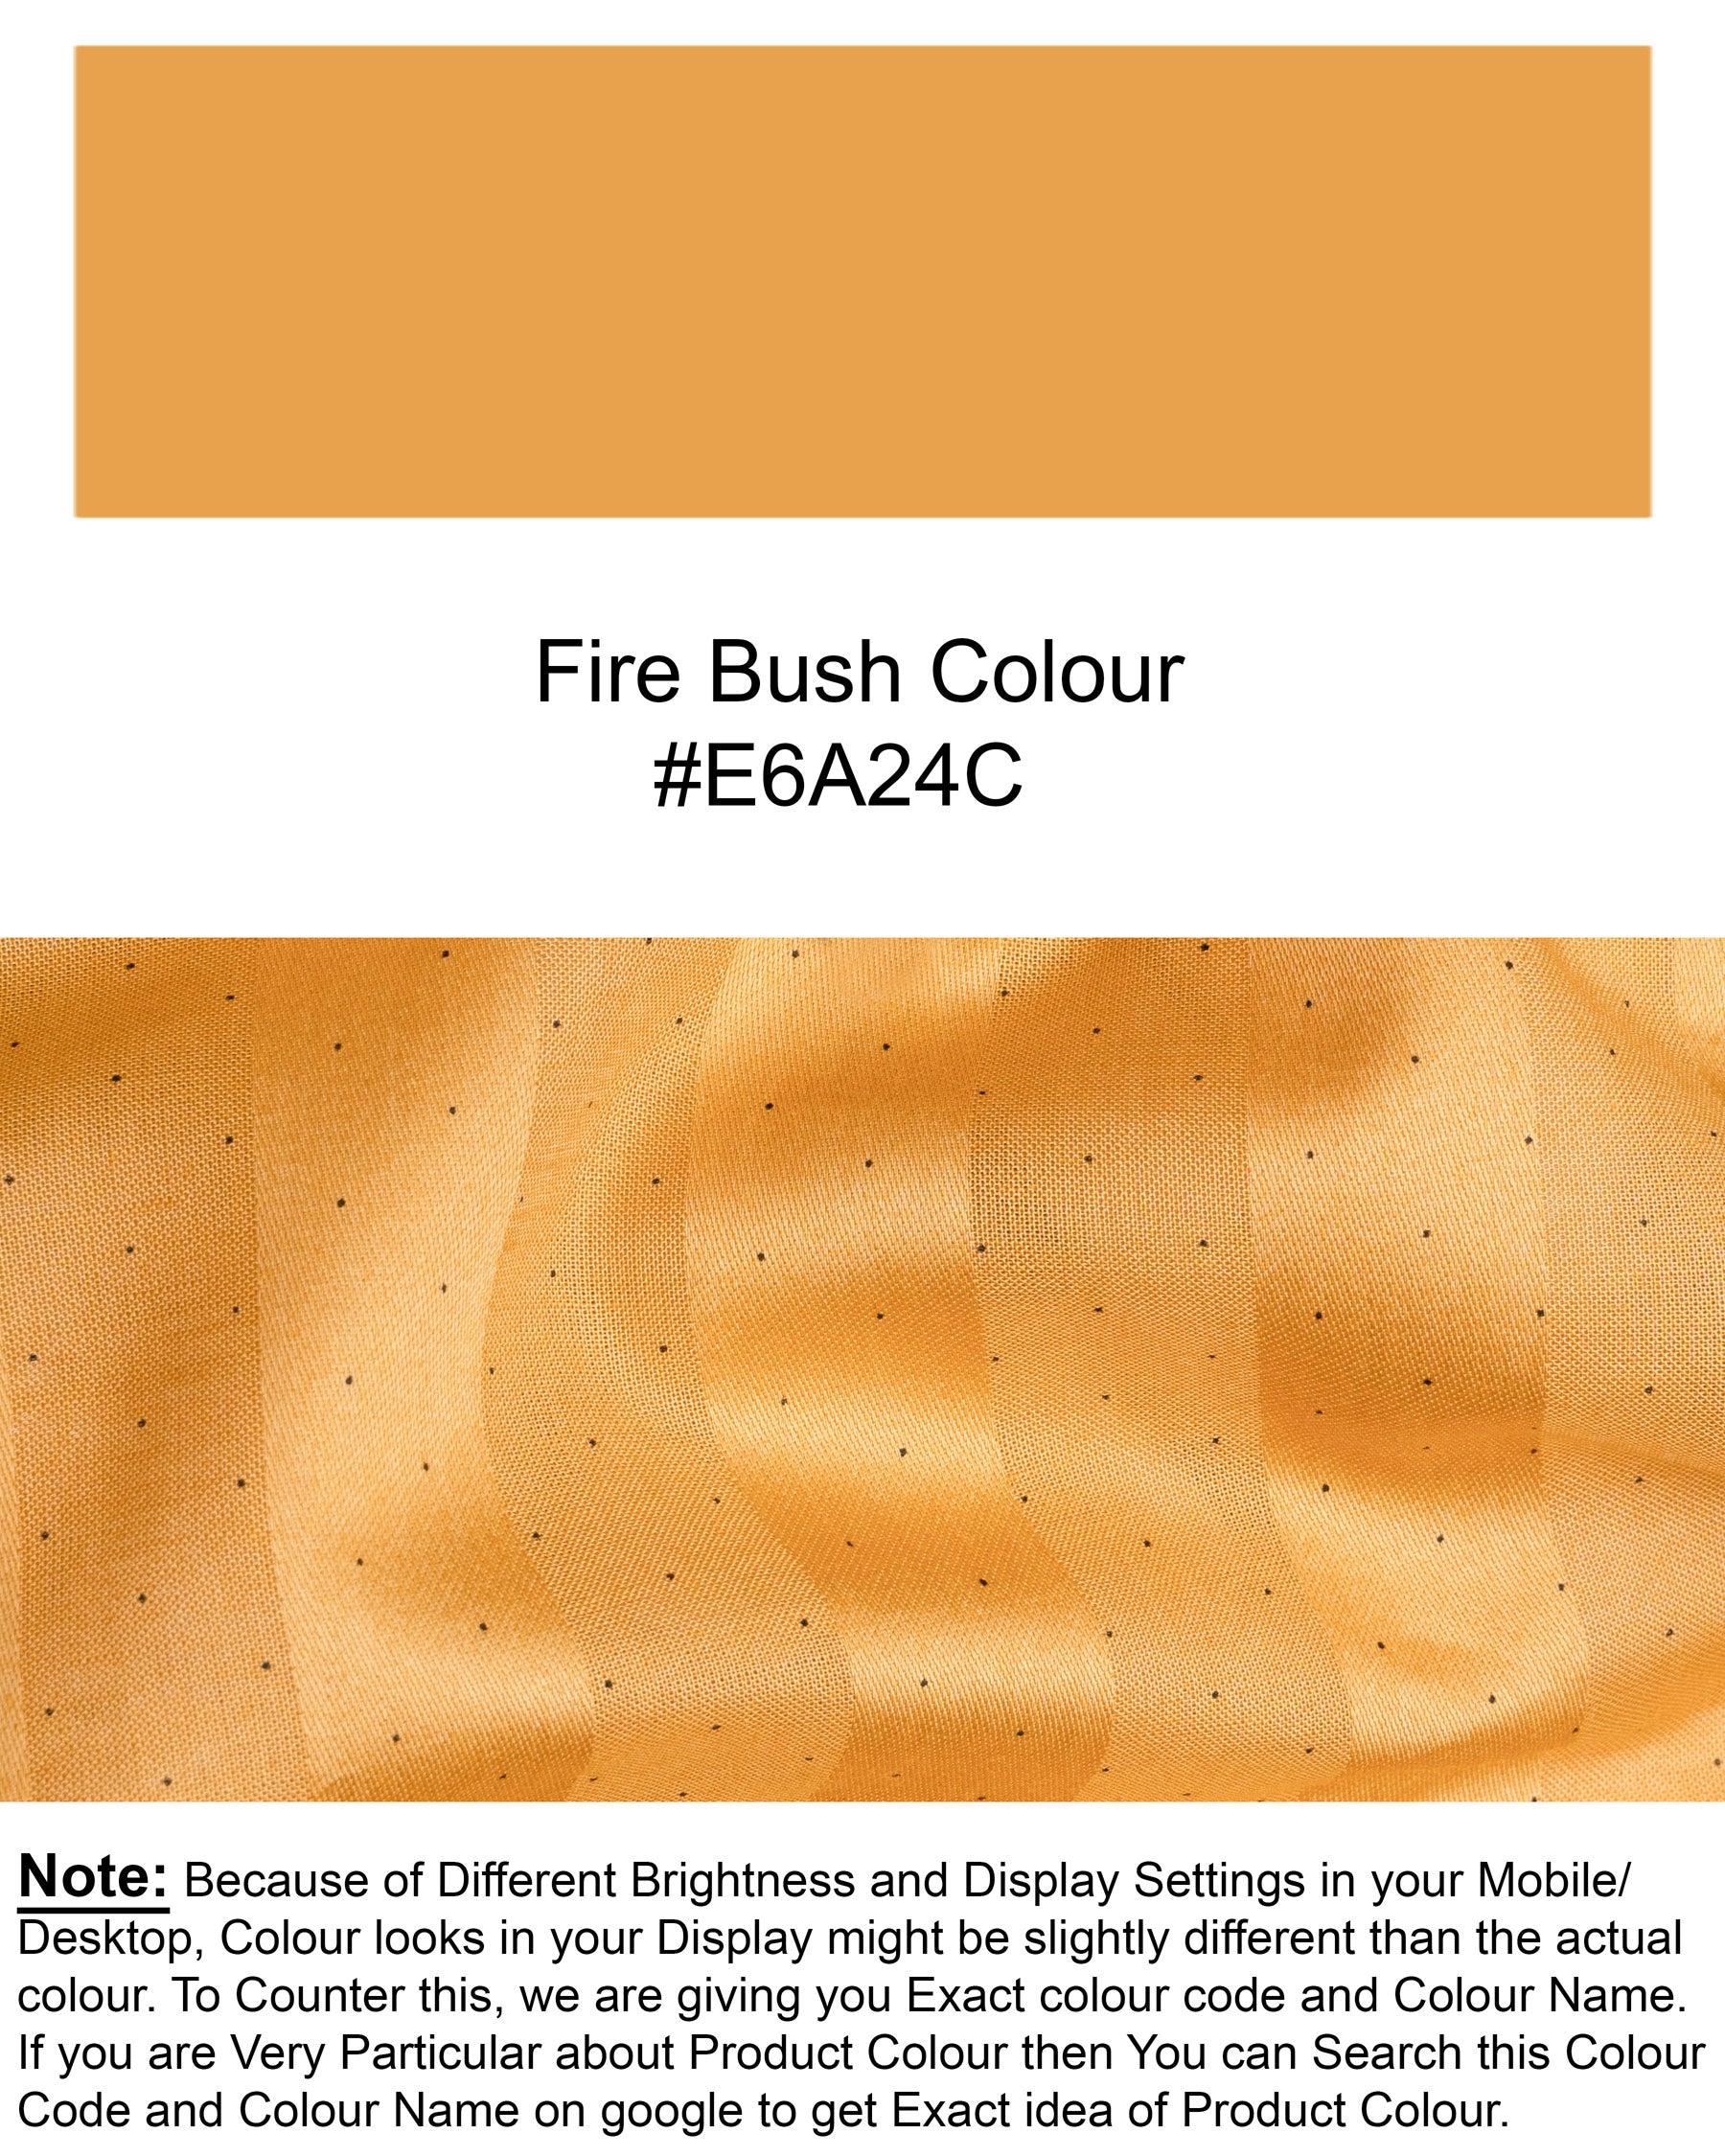 Fire Bush Thick Striped Dobby Textured Premium Giza Cotton Shirt 5122-CA-38, 5122-CA-H-38, 5122-CA-39, 5122-CA-H-39, 5122-CA-40, 5122-CA-H-40, 5122-CA-42, 5122-CA-H-42, 5122-CA-44, 5122-CA-H-44, 5122-CA-46, 5122-CA-H-46, 5122-CA-48, 5122-CA-H-48, 5122-CA-50, 5122-CA-H-50, 5122-CA-52, 5122-CA-H-52